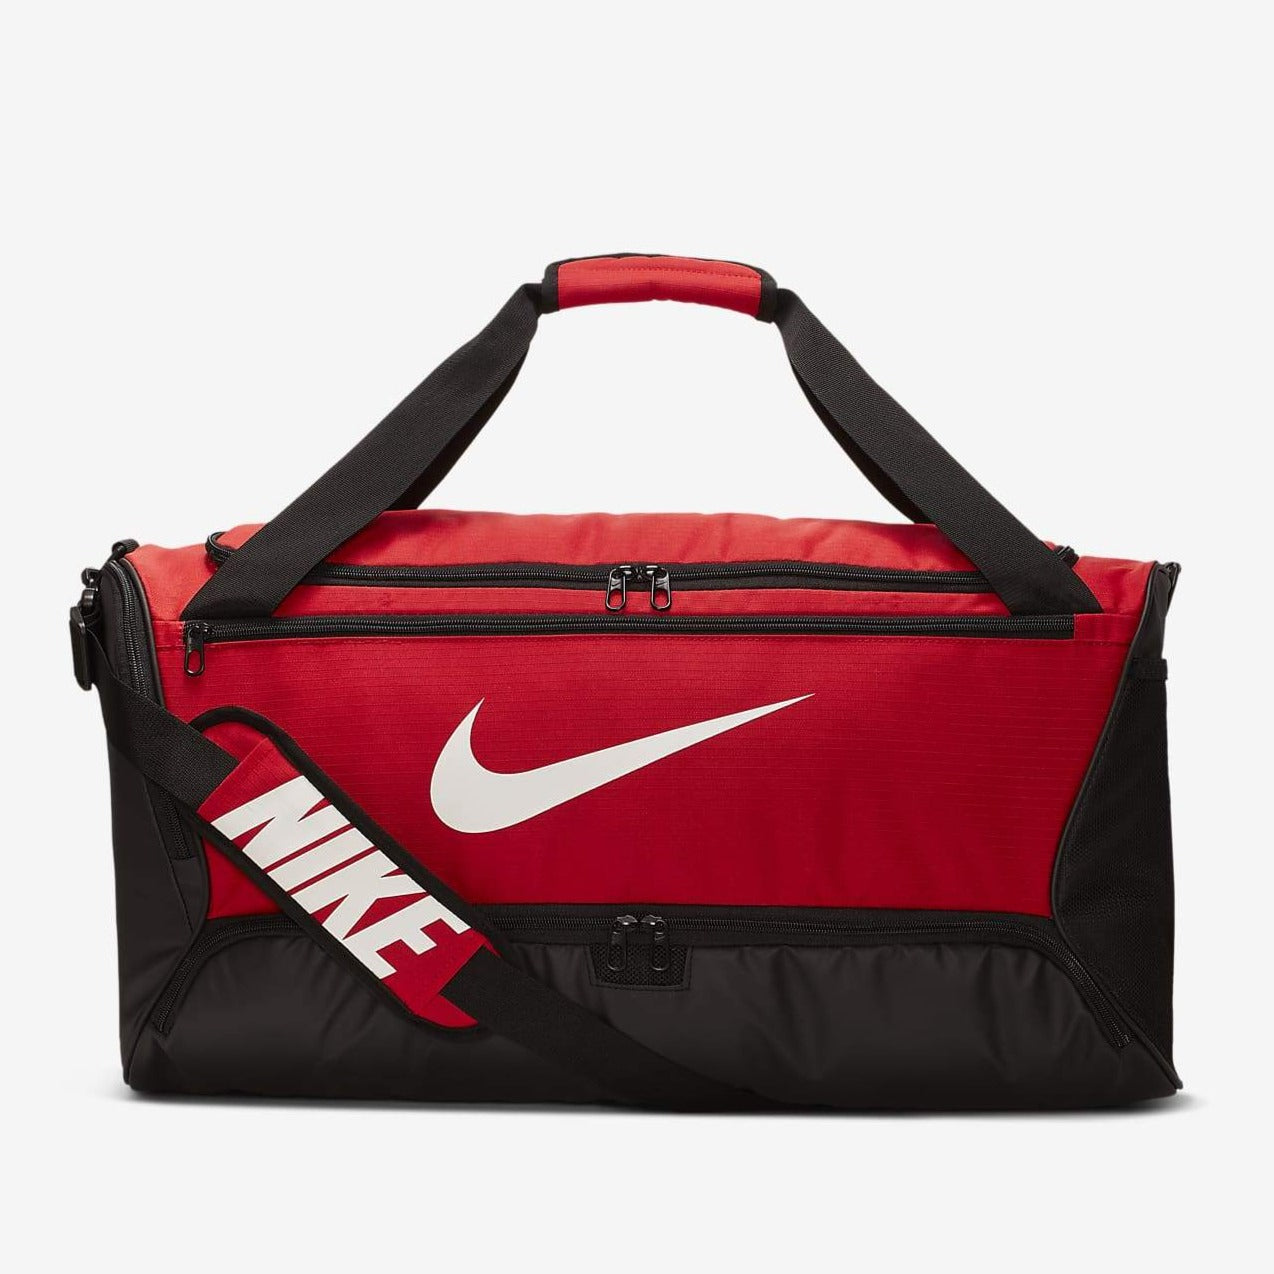 Nike Brasilia Duffel Bag (Small - 41L)(Black/Red)(BA5957-657